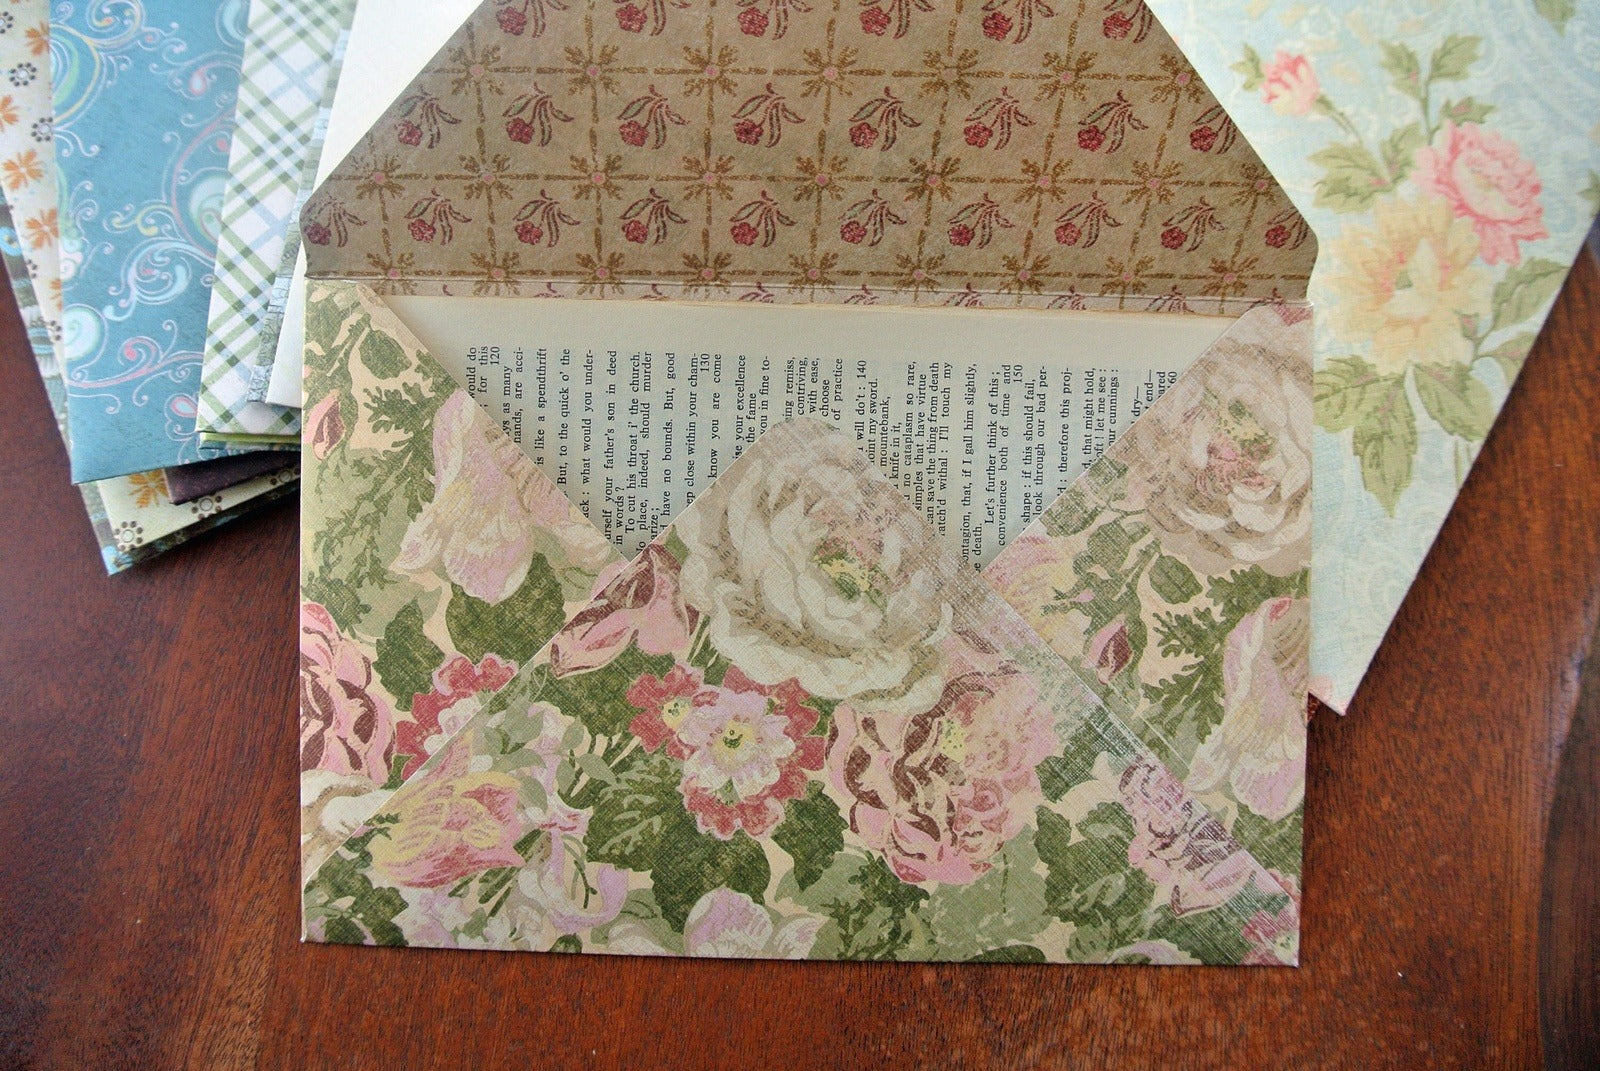 Vintage Shakespeare Book Pages in a Handmade Envelope | Junk Journal Ephemera Lot